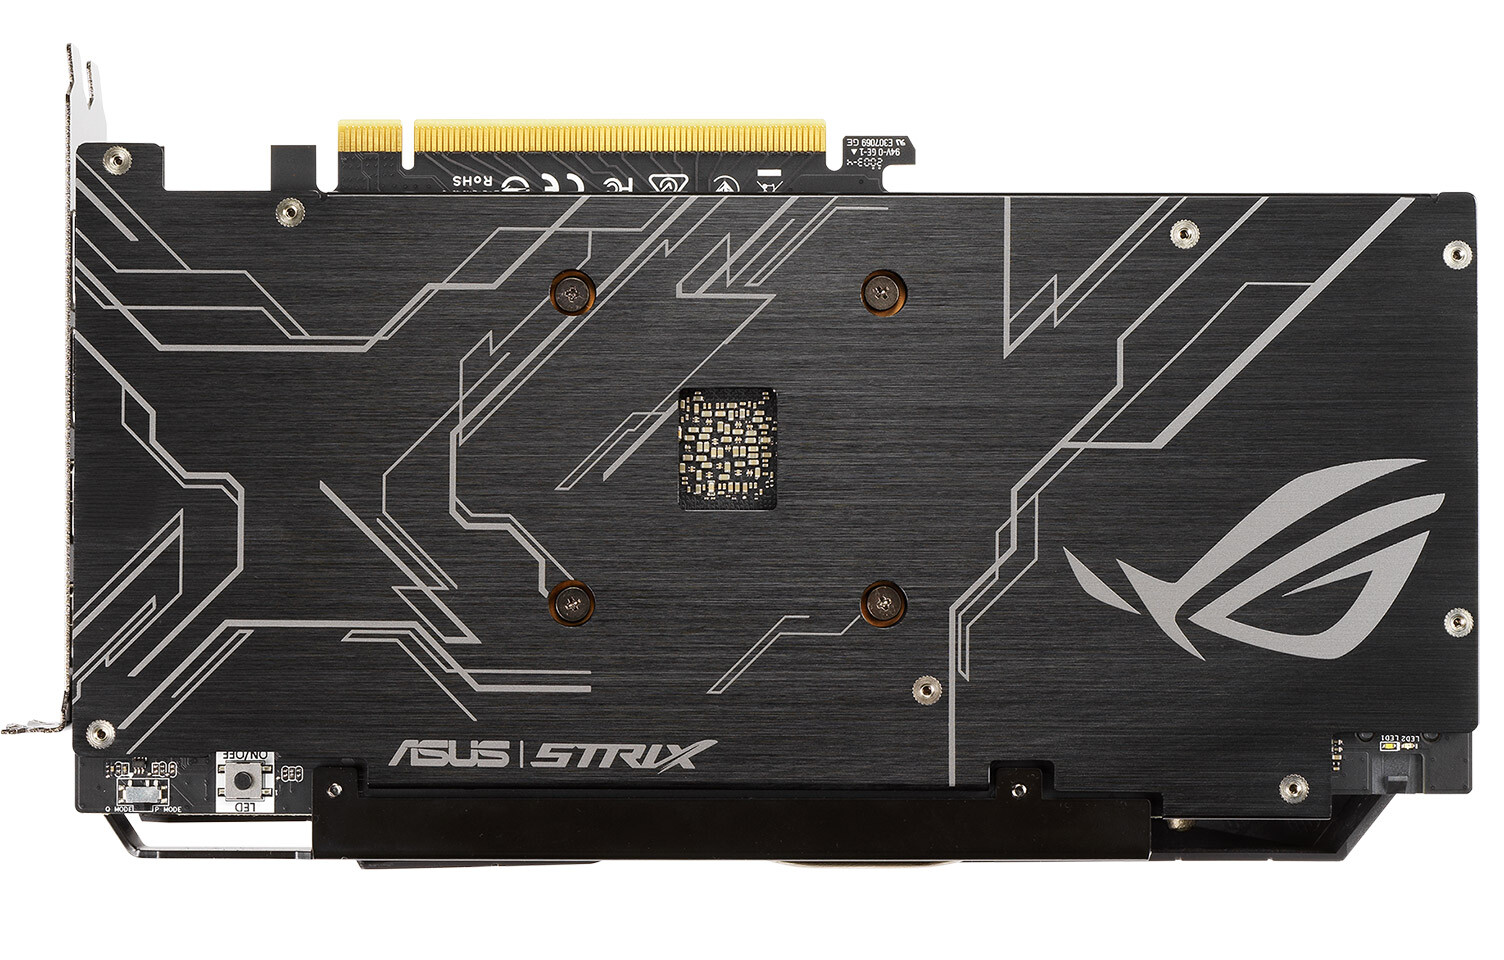 tiopjqhwszvenbck เอซุสเปิดตัวการ์ดจอ ASUS ROG Strix GeForce GTX 1650 GDDR6 รุ่นใหม่ล่าสุดพร้อมอัดแน่นด้วยฟีเจอร์แบบจัดเต็ม   